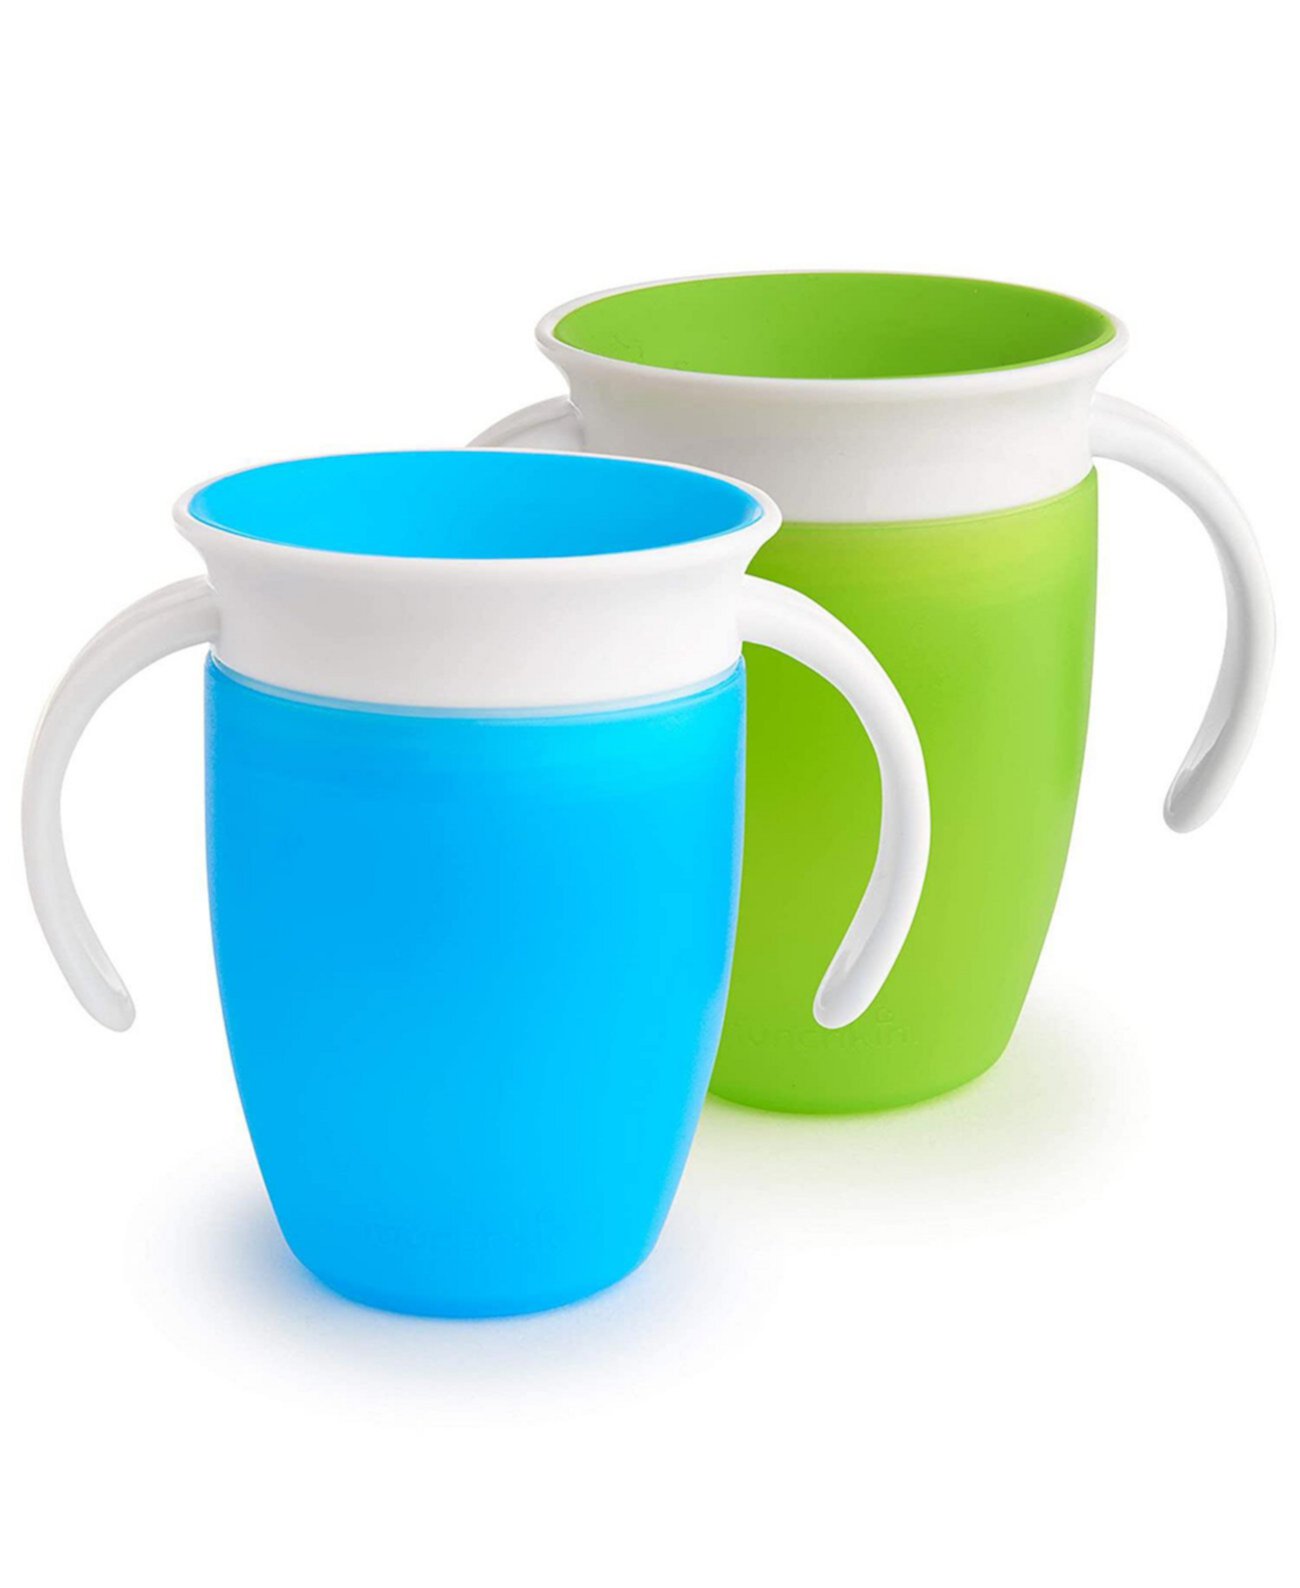 Miracle 360 Trainer Cup, 7 унций, 2 шт. в упаковке, синий/зеленый Munchkin